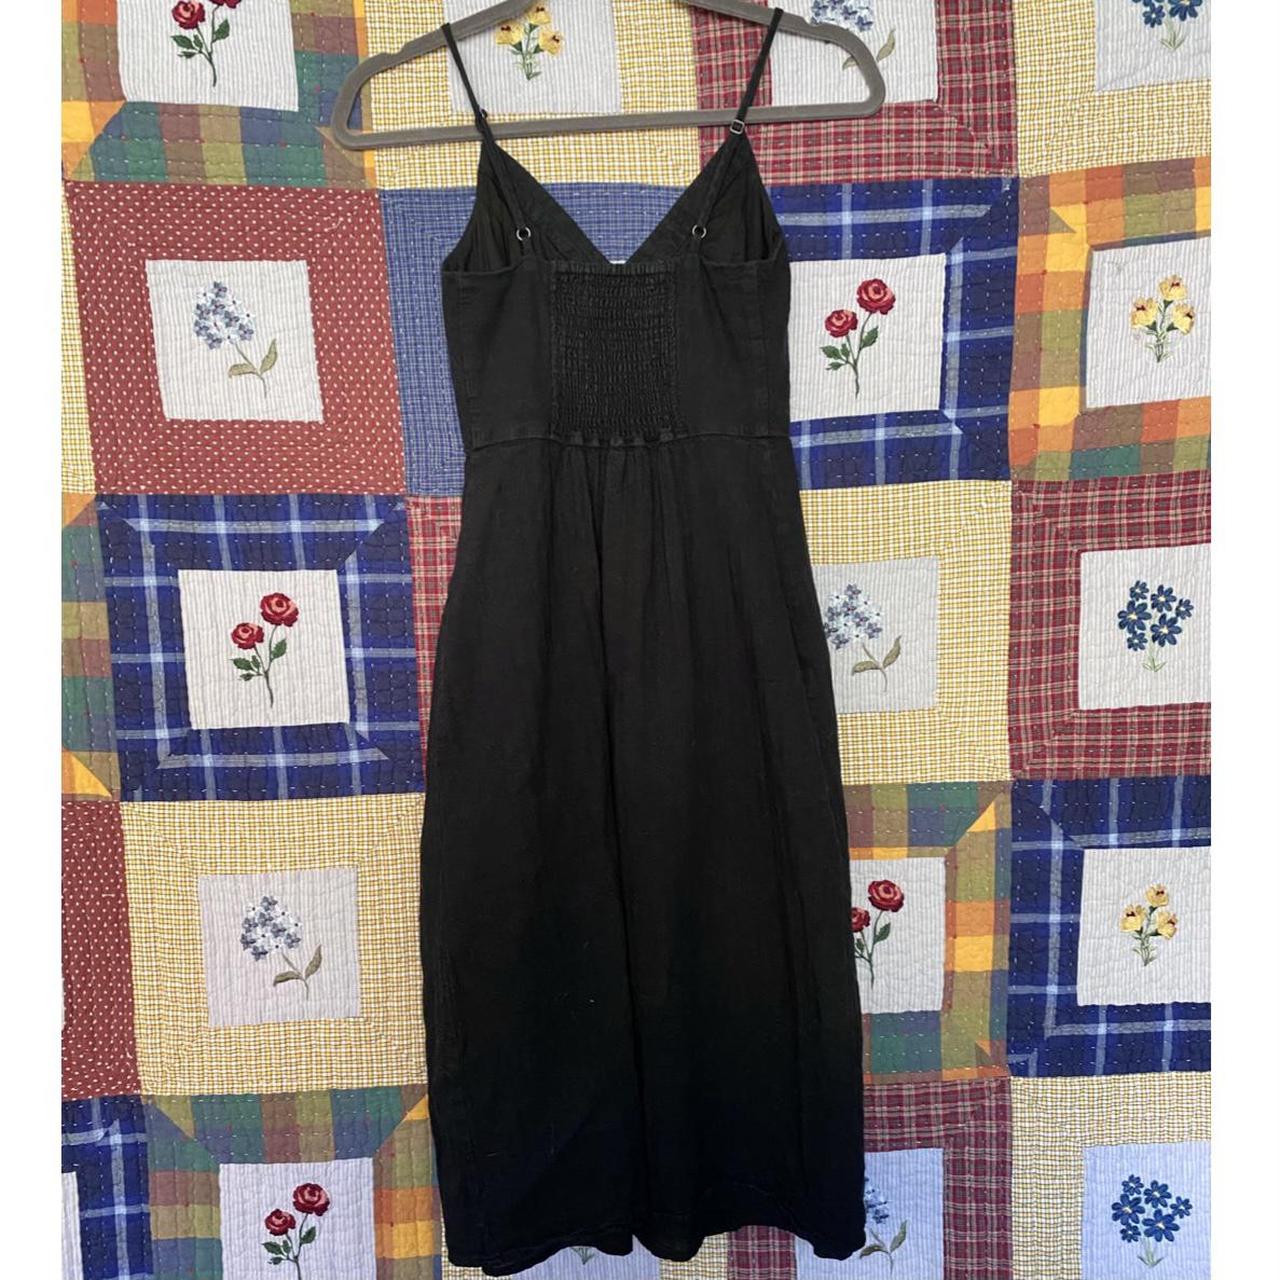 Abercrombie & Fitch Women's Black Dress (4)